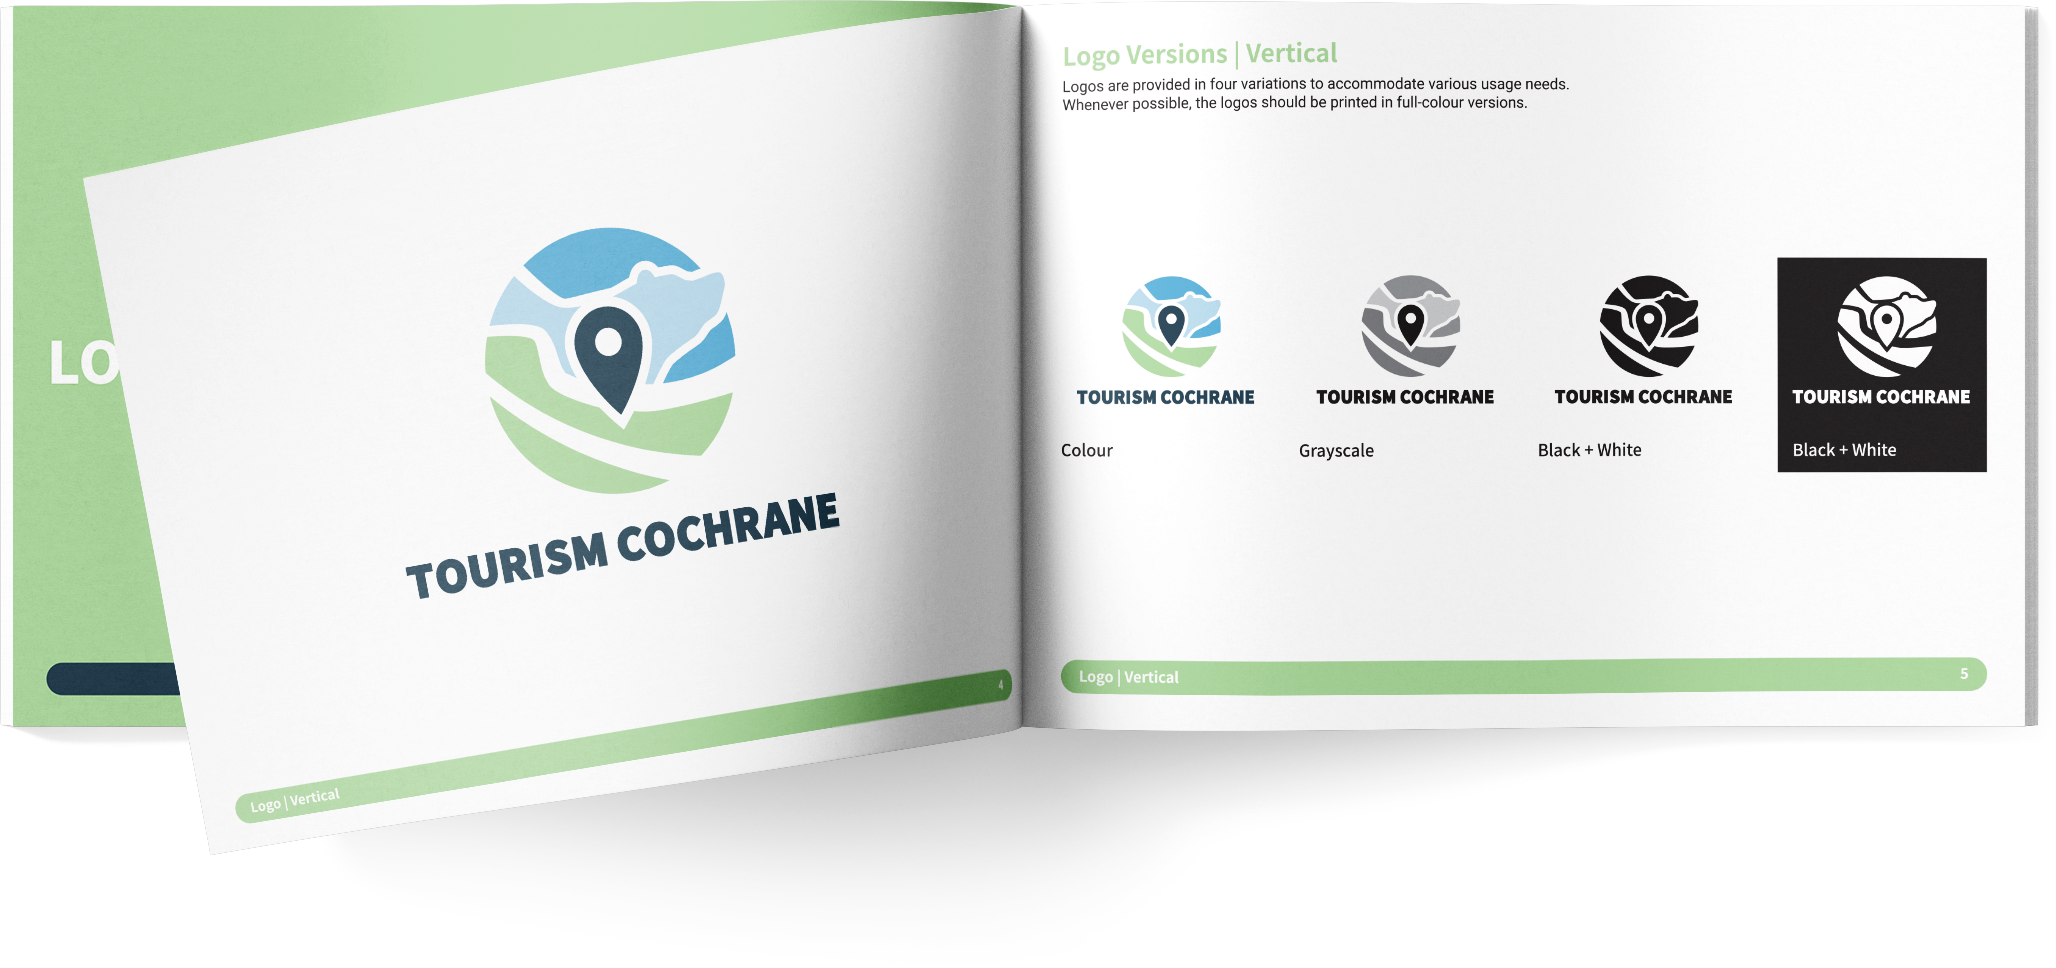 Tourism Cochrane brand guideline preview